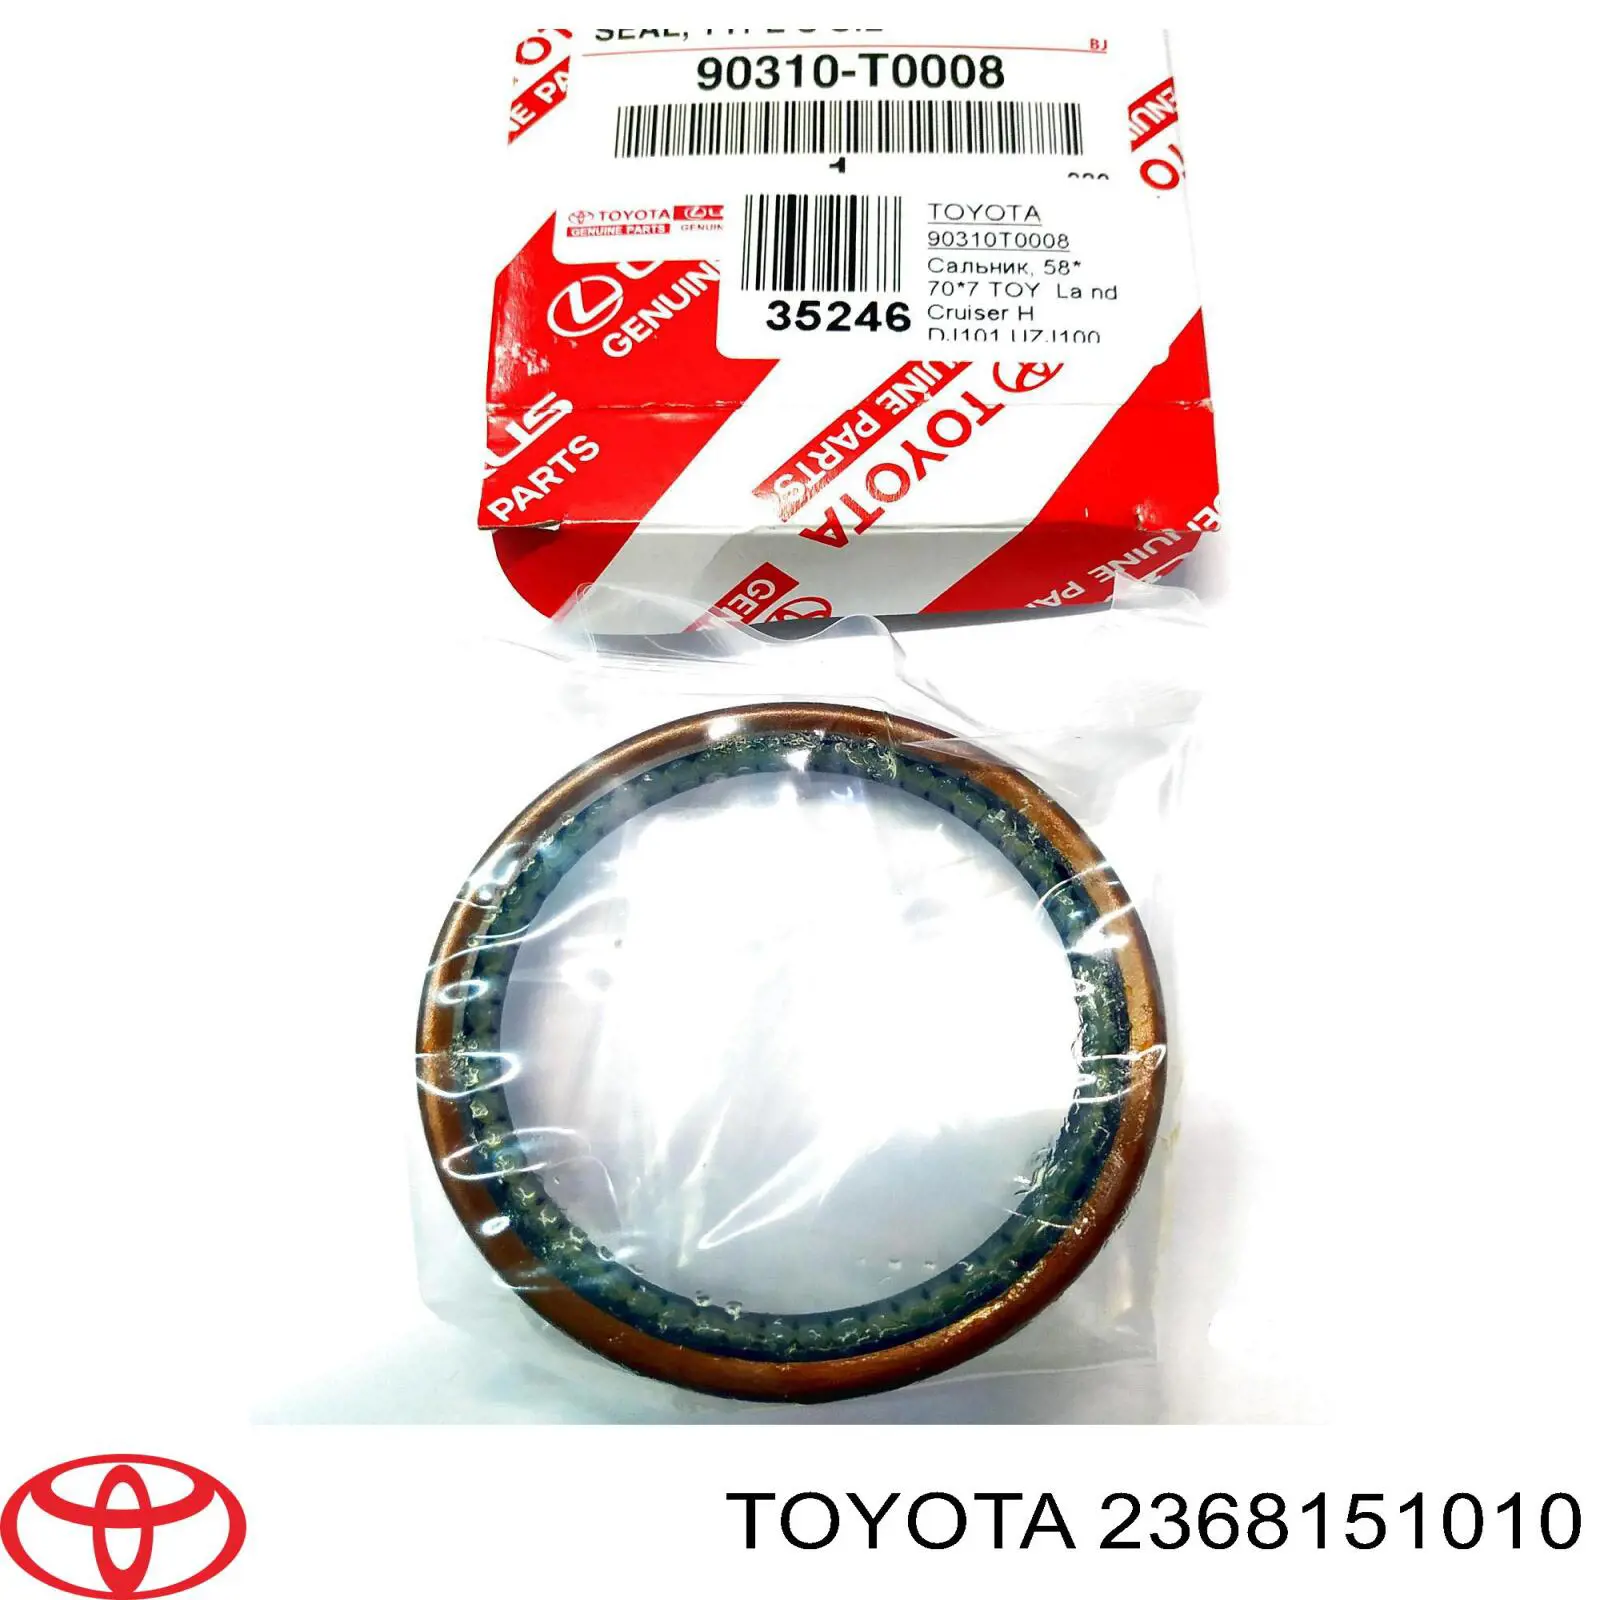 2368151010 Toyota junta, tapa de culata de cilindro, anillo de junta